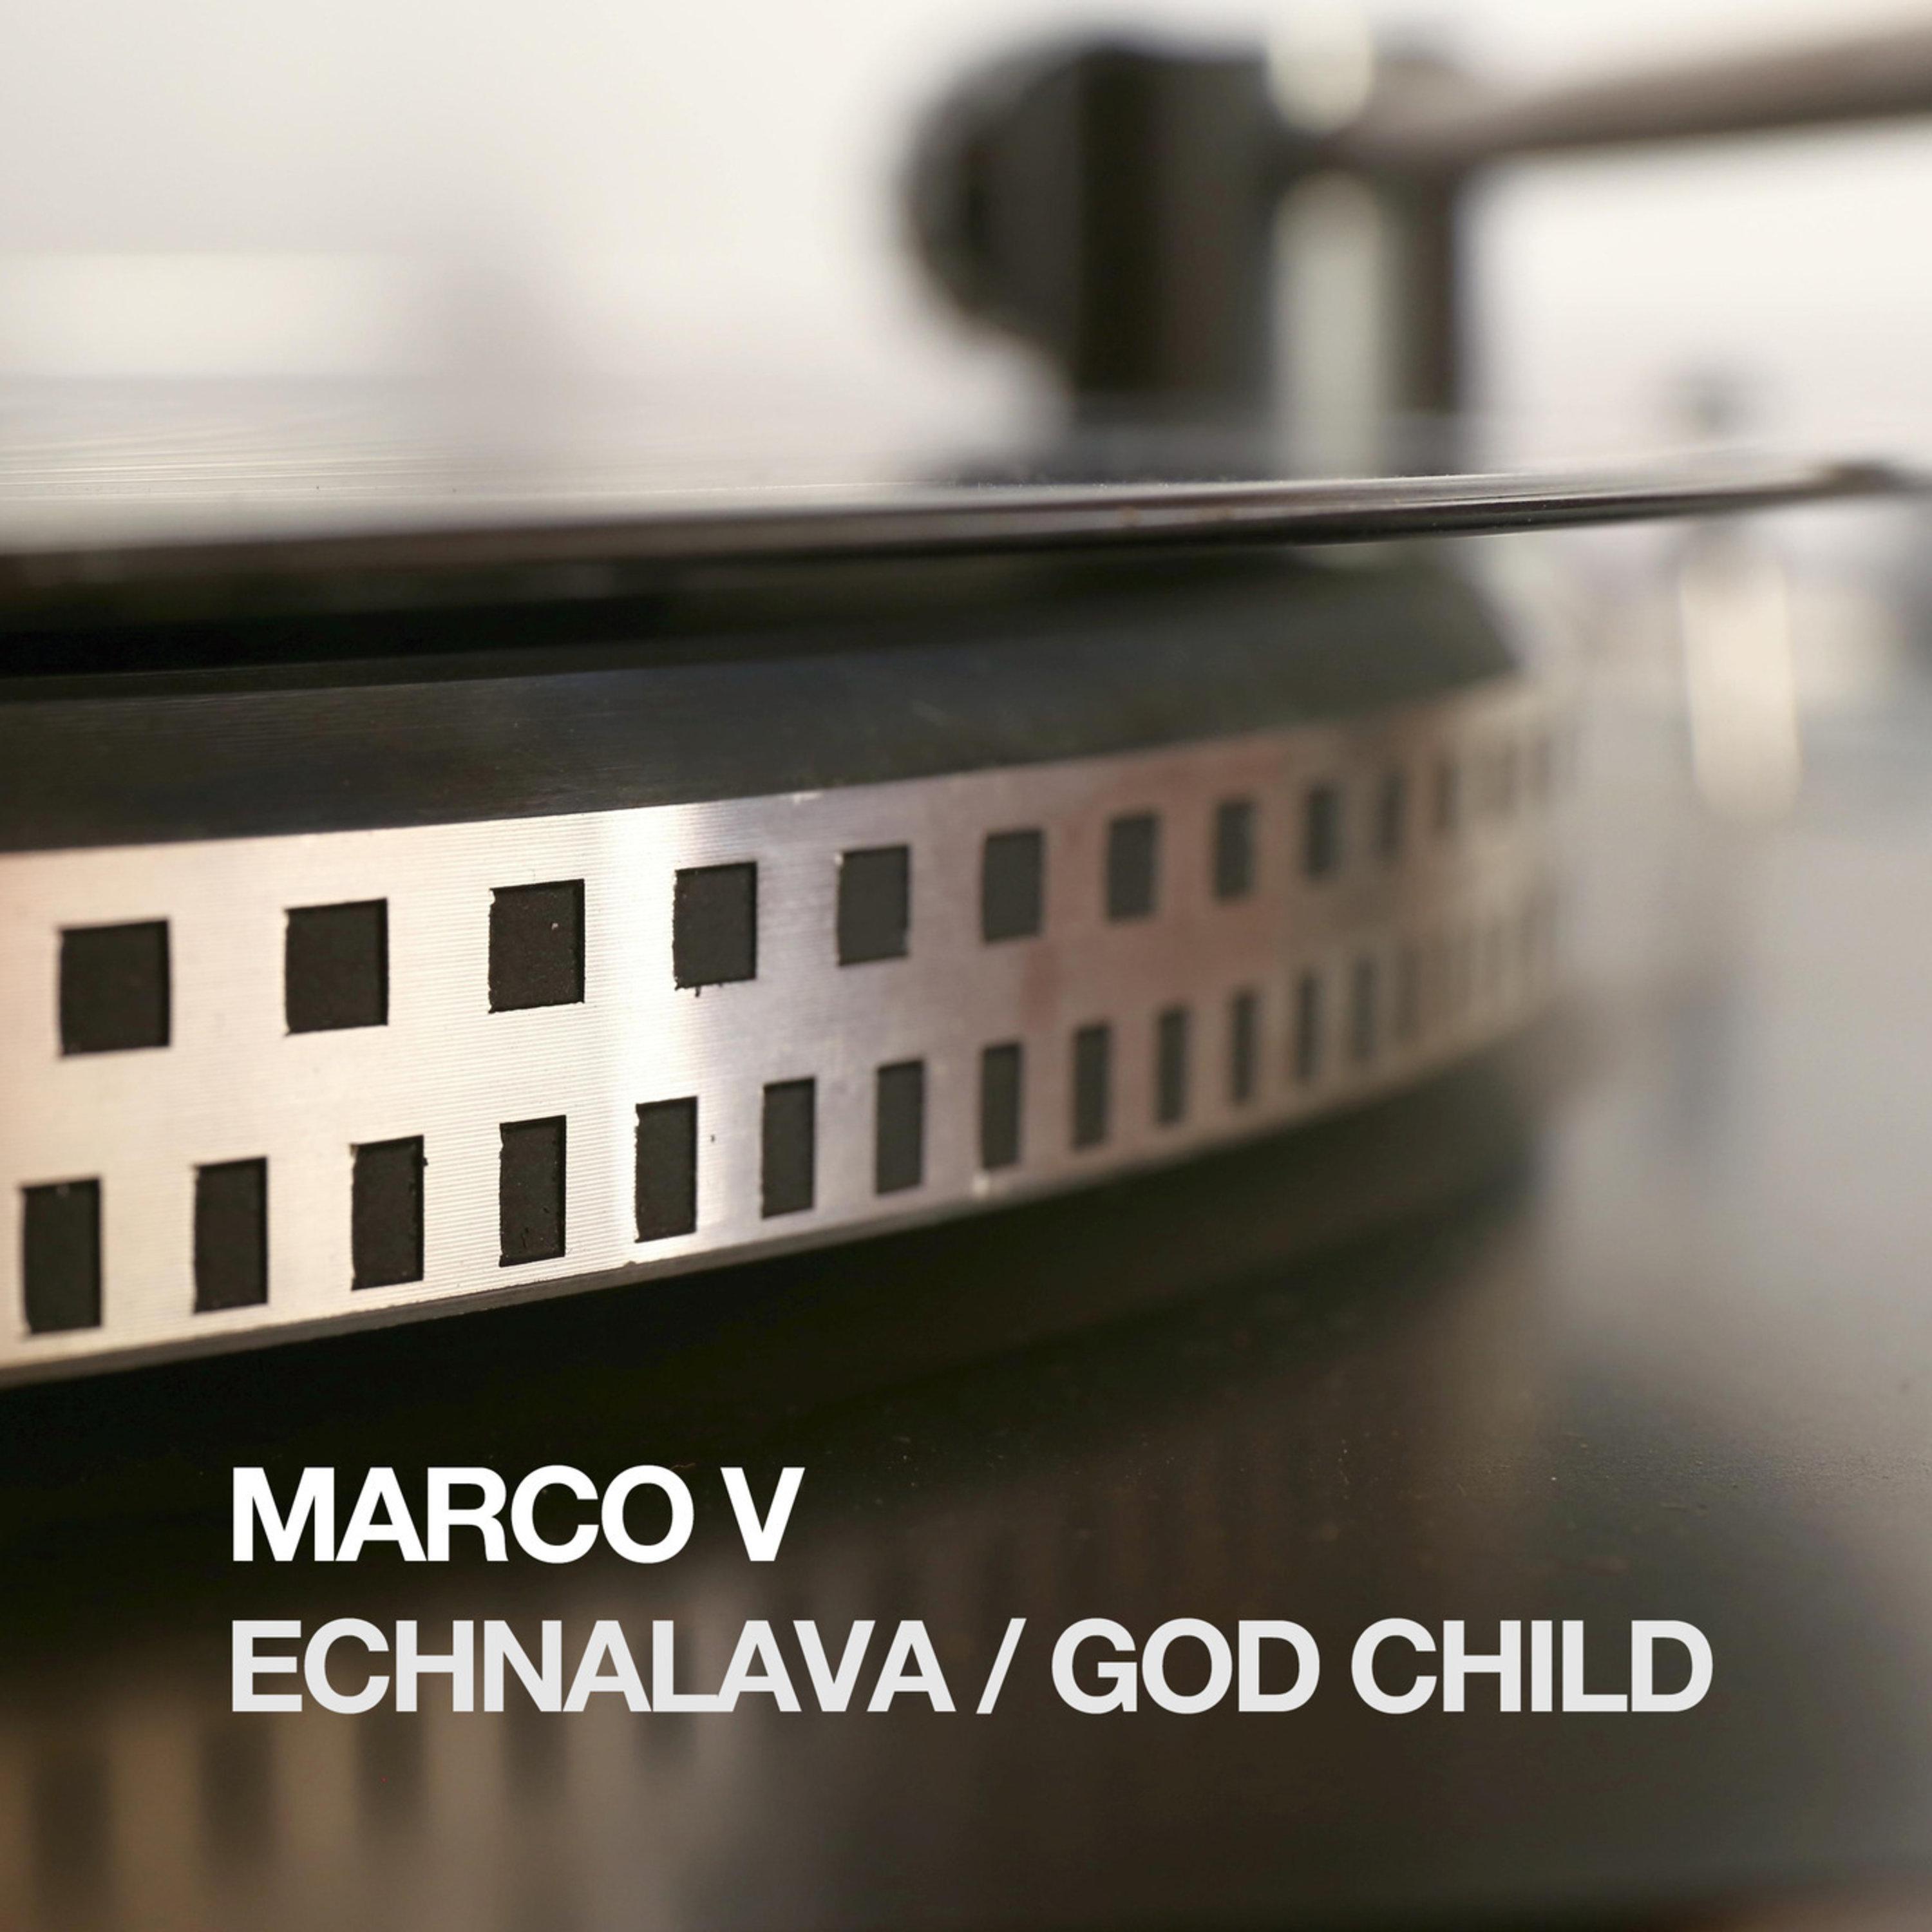 Echnalava / God Child